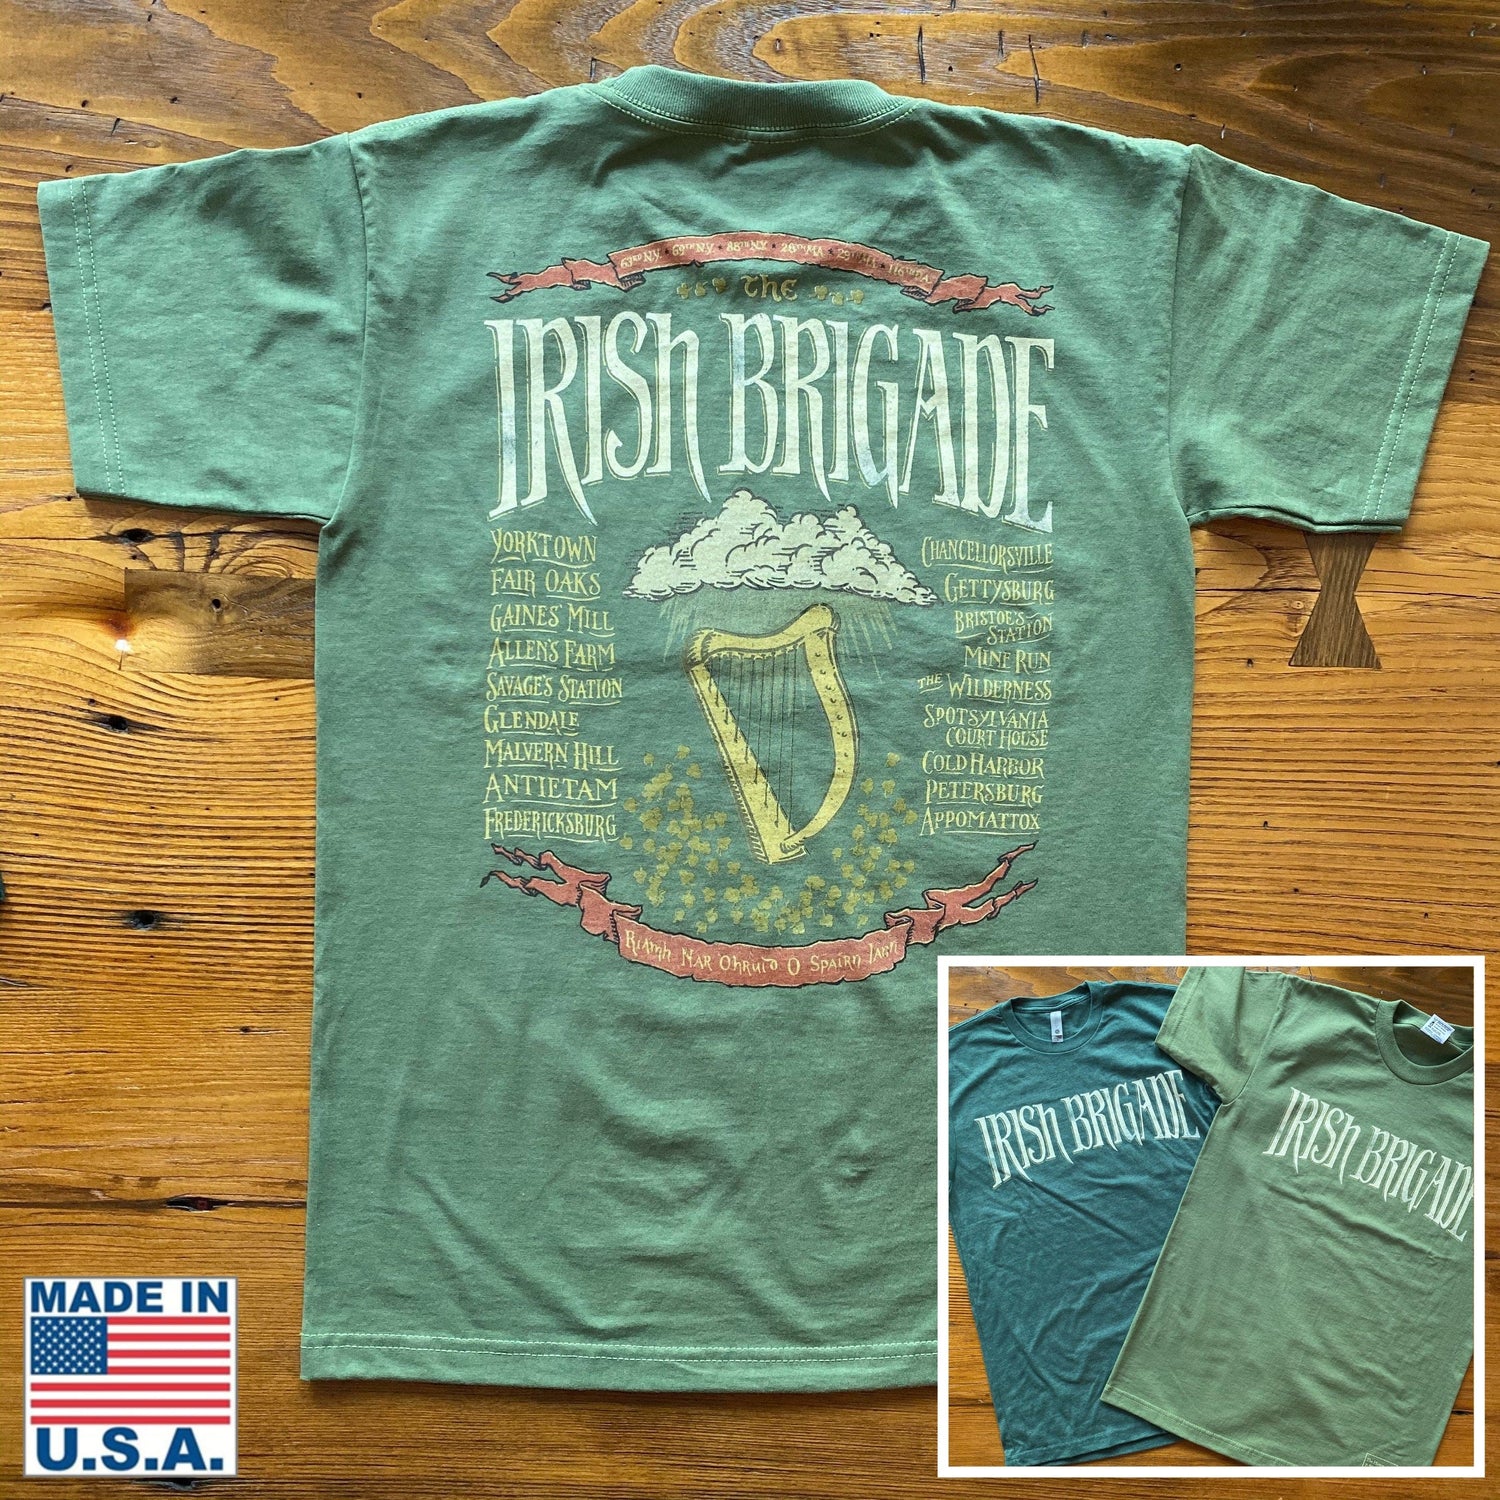 The Civil War "Irish Brigade"